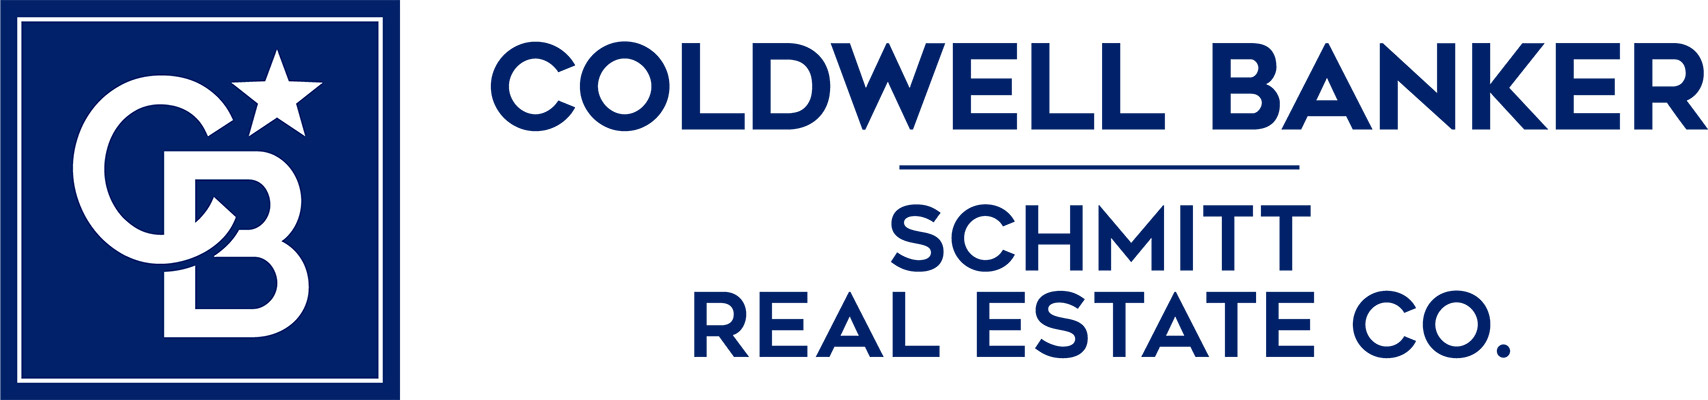 Strain-Pabotoy Real Estate Team - Coldwell Banker Schmitt Logo